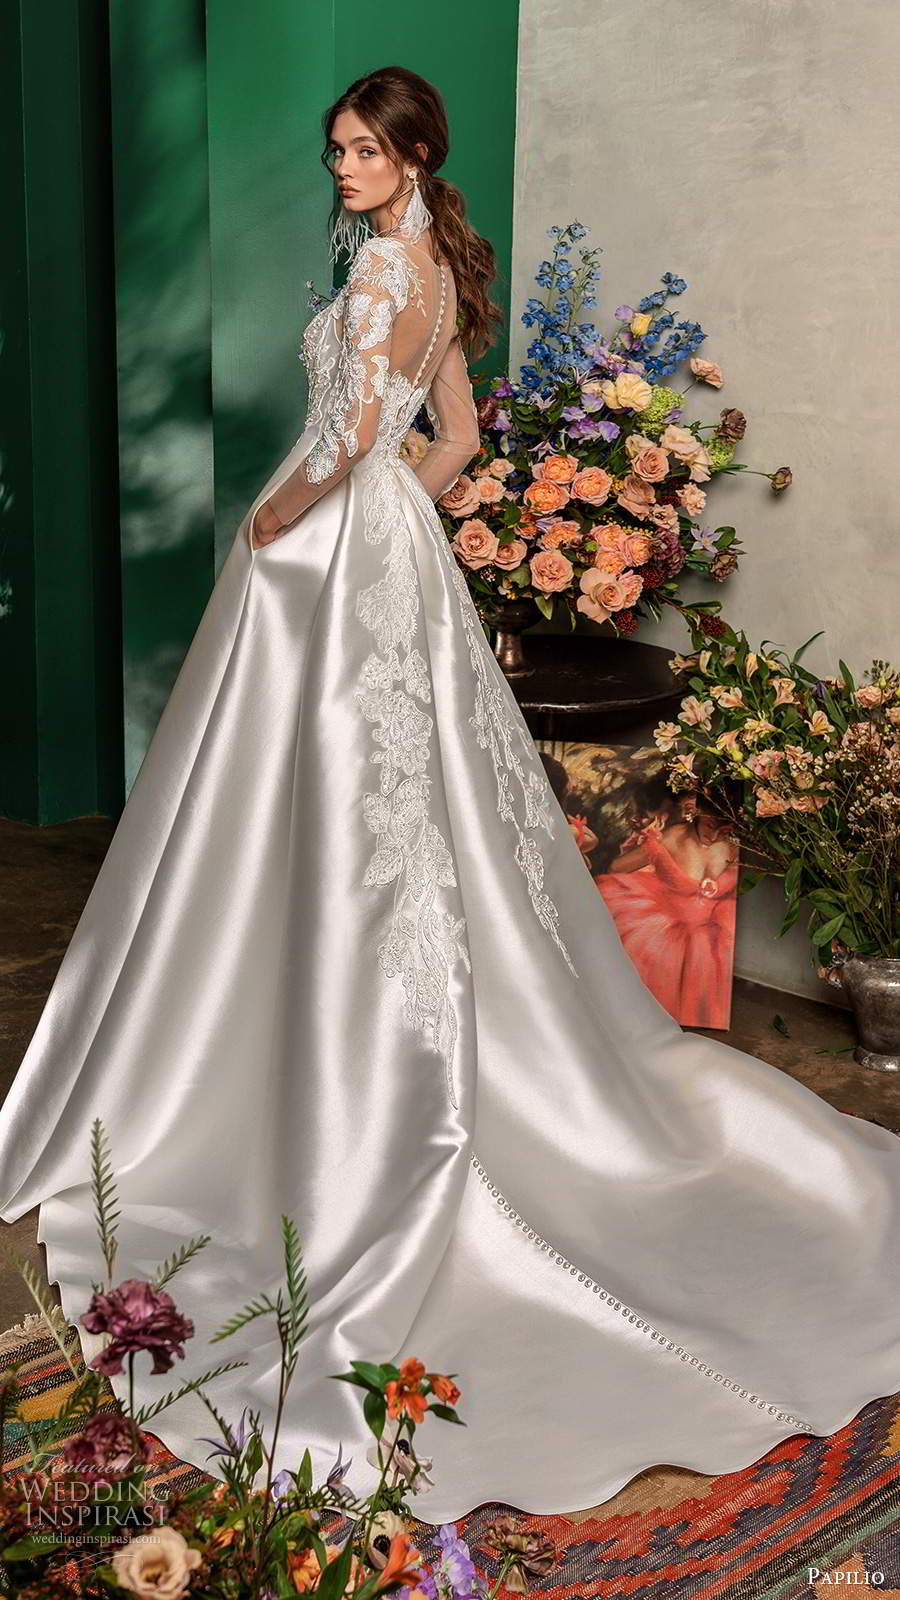 papilio fall 2020 bridal illusion long sleeves sheer bateau sweetheart neckline embellished a line ball gown wedding dress pockets chapel train (3) bv